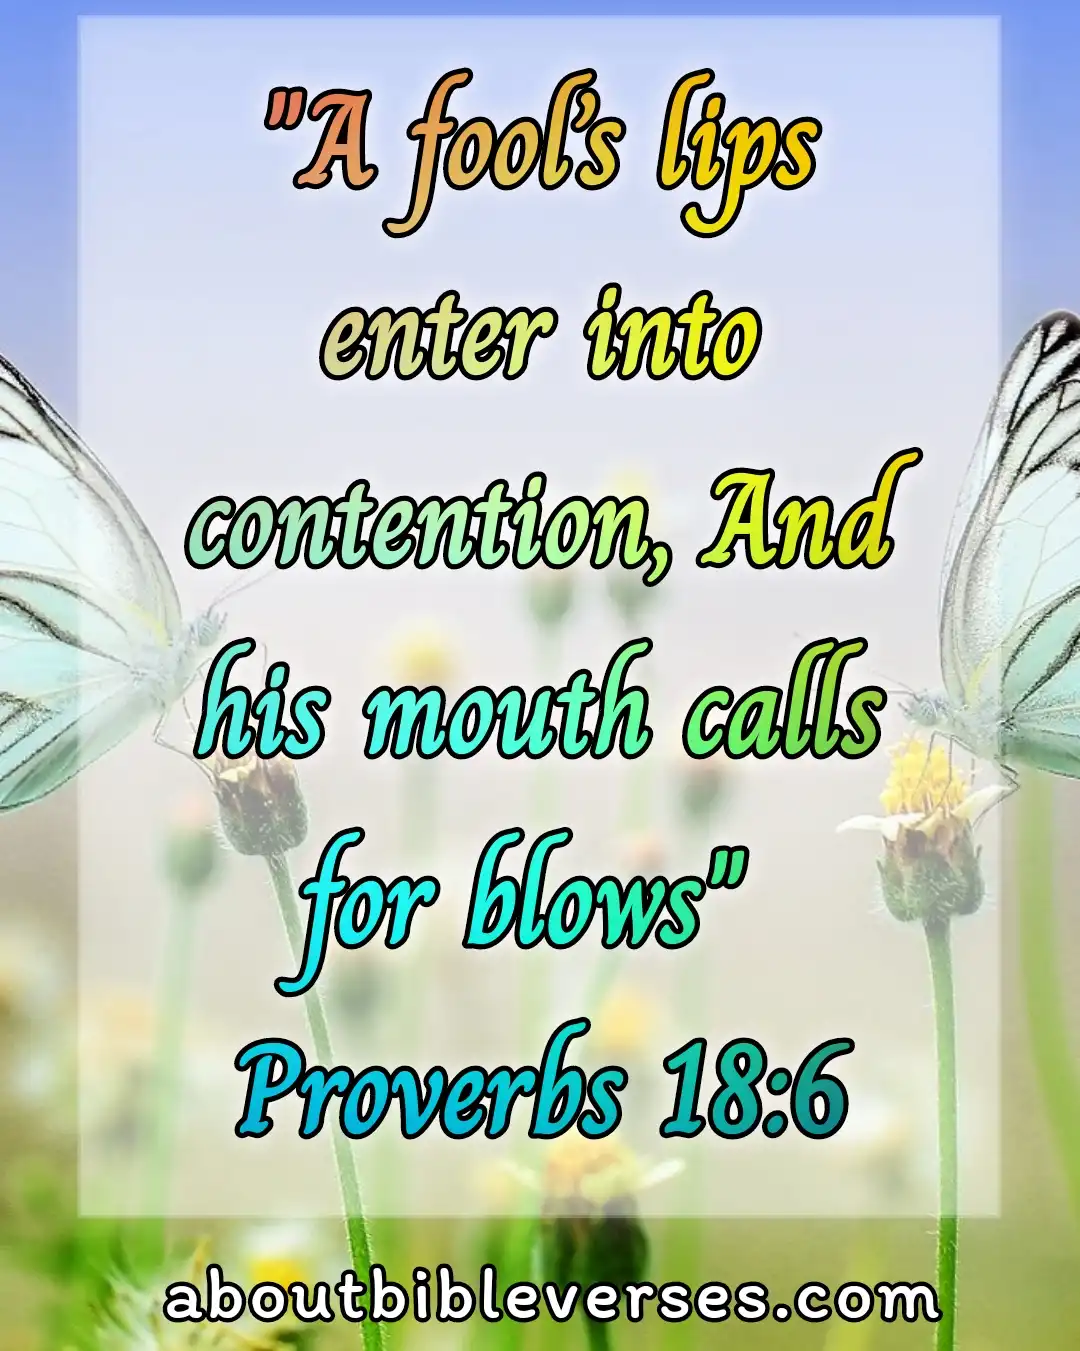 Today bible verse (Proverbs 18:6)